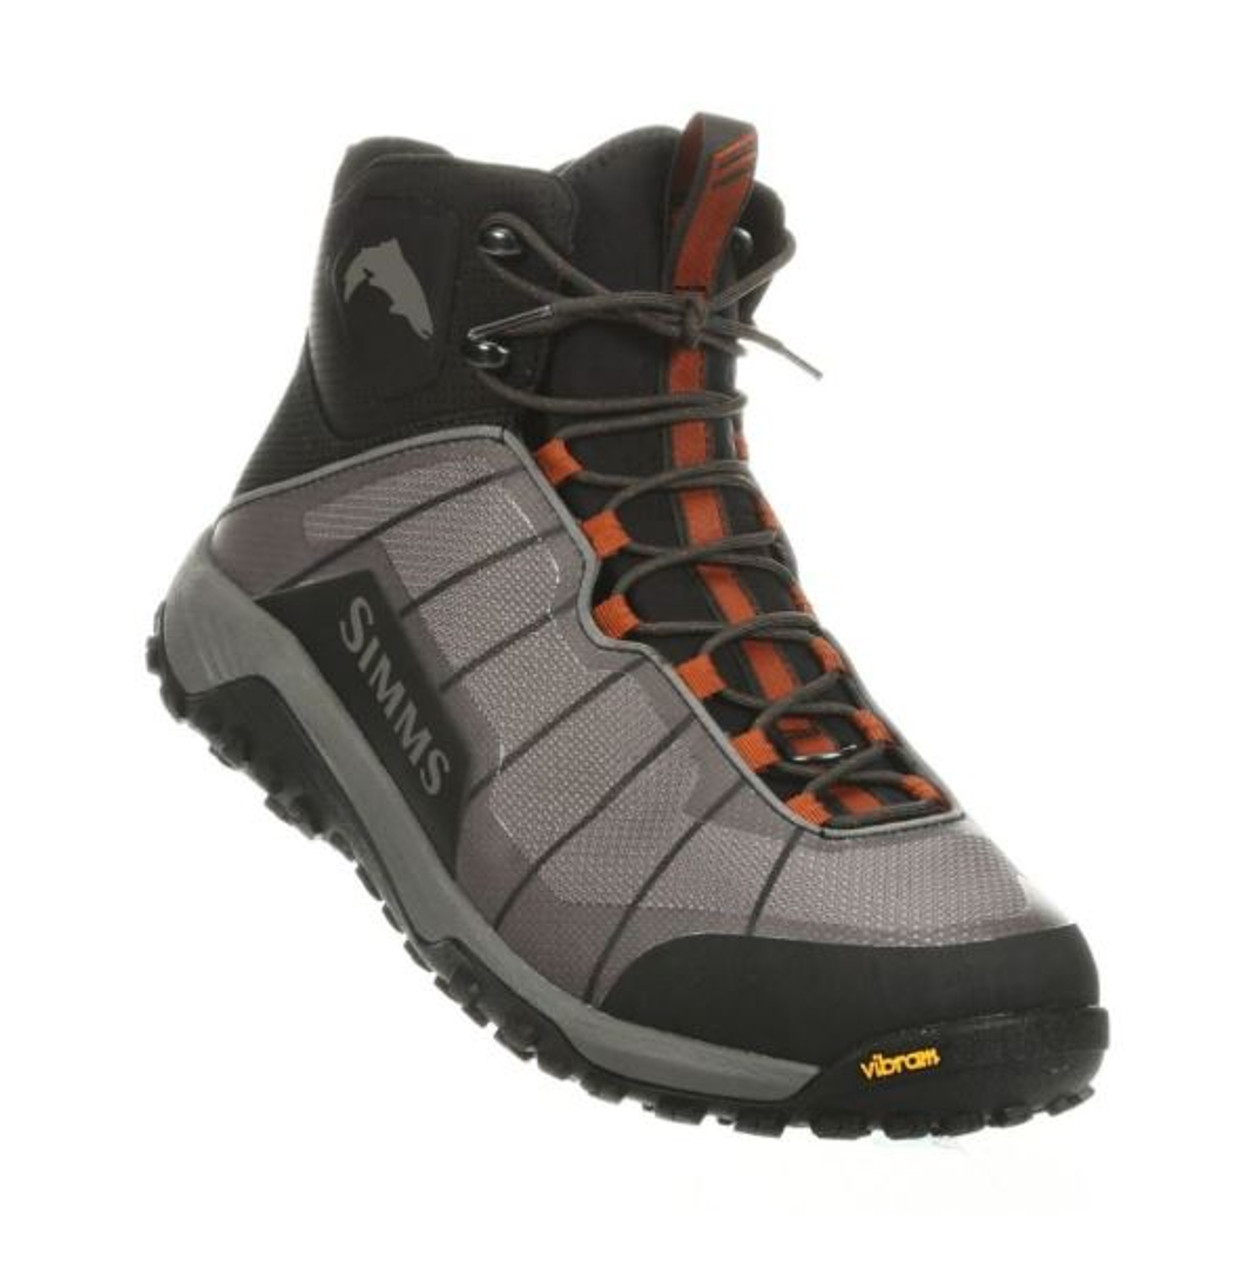 Flyweight Wading Boot - Vibram Sole (Size 11) - Steel Grey - Ramsey Outdoor